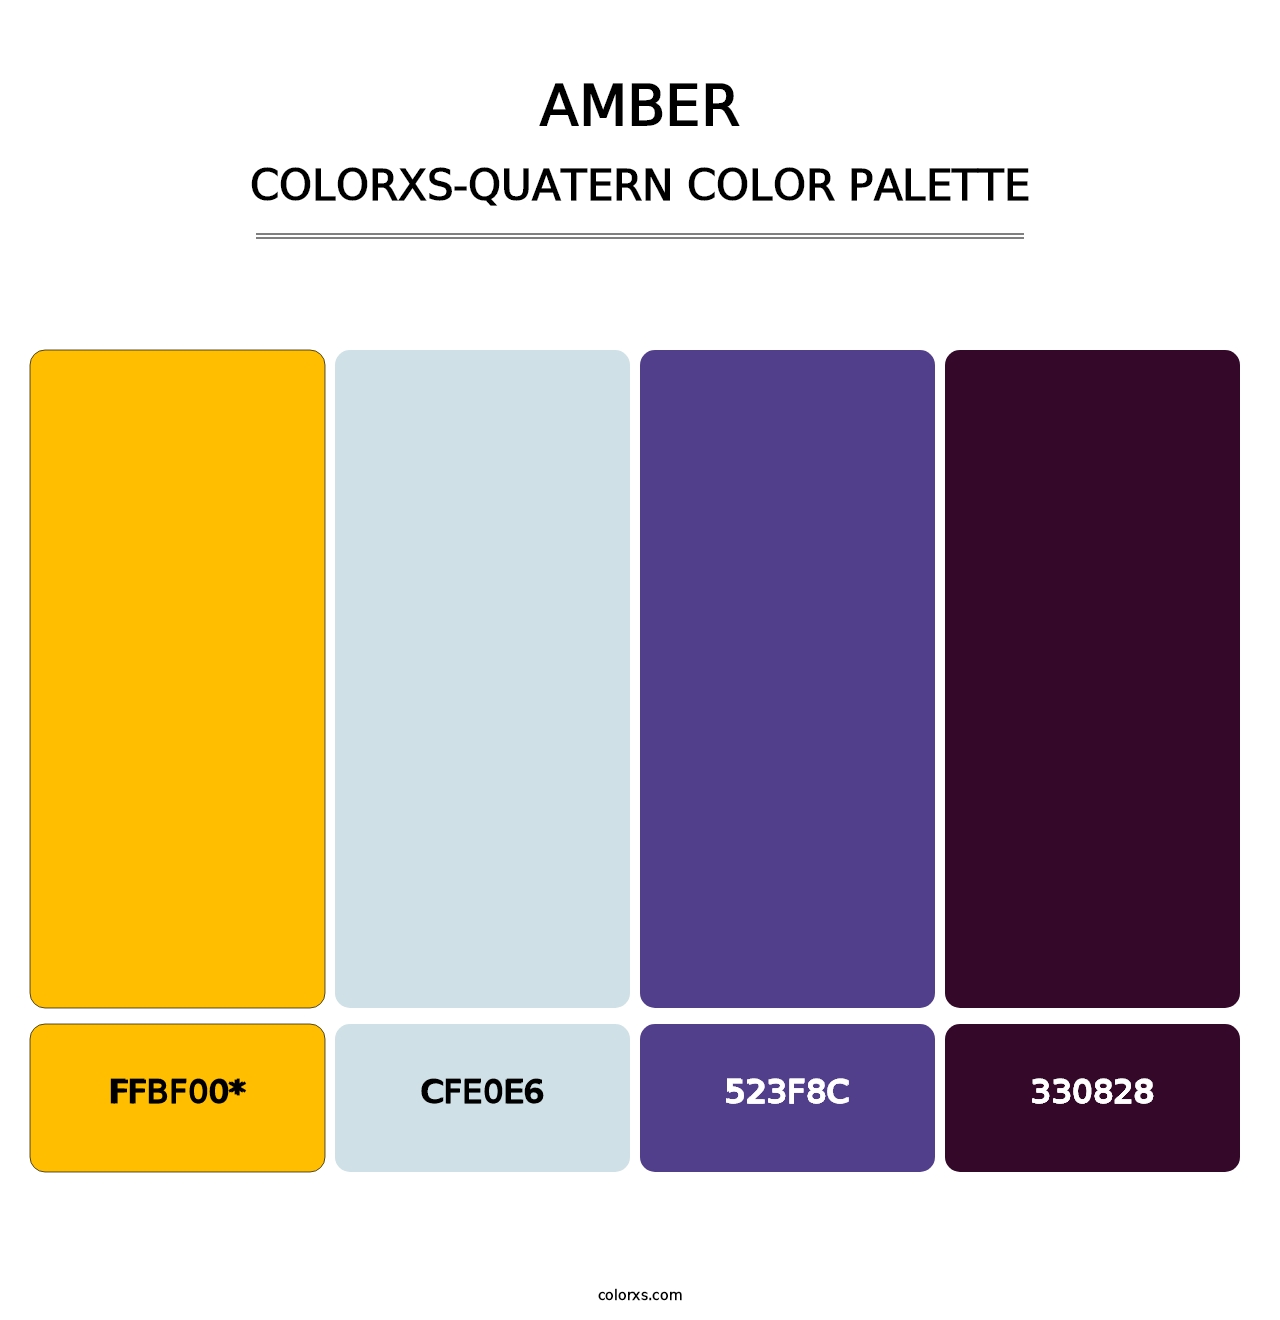 Amber - Colorxs Quatern Palette